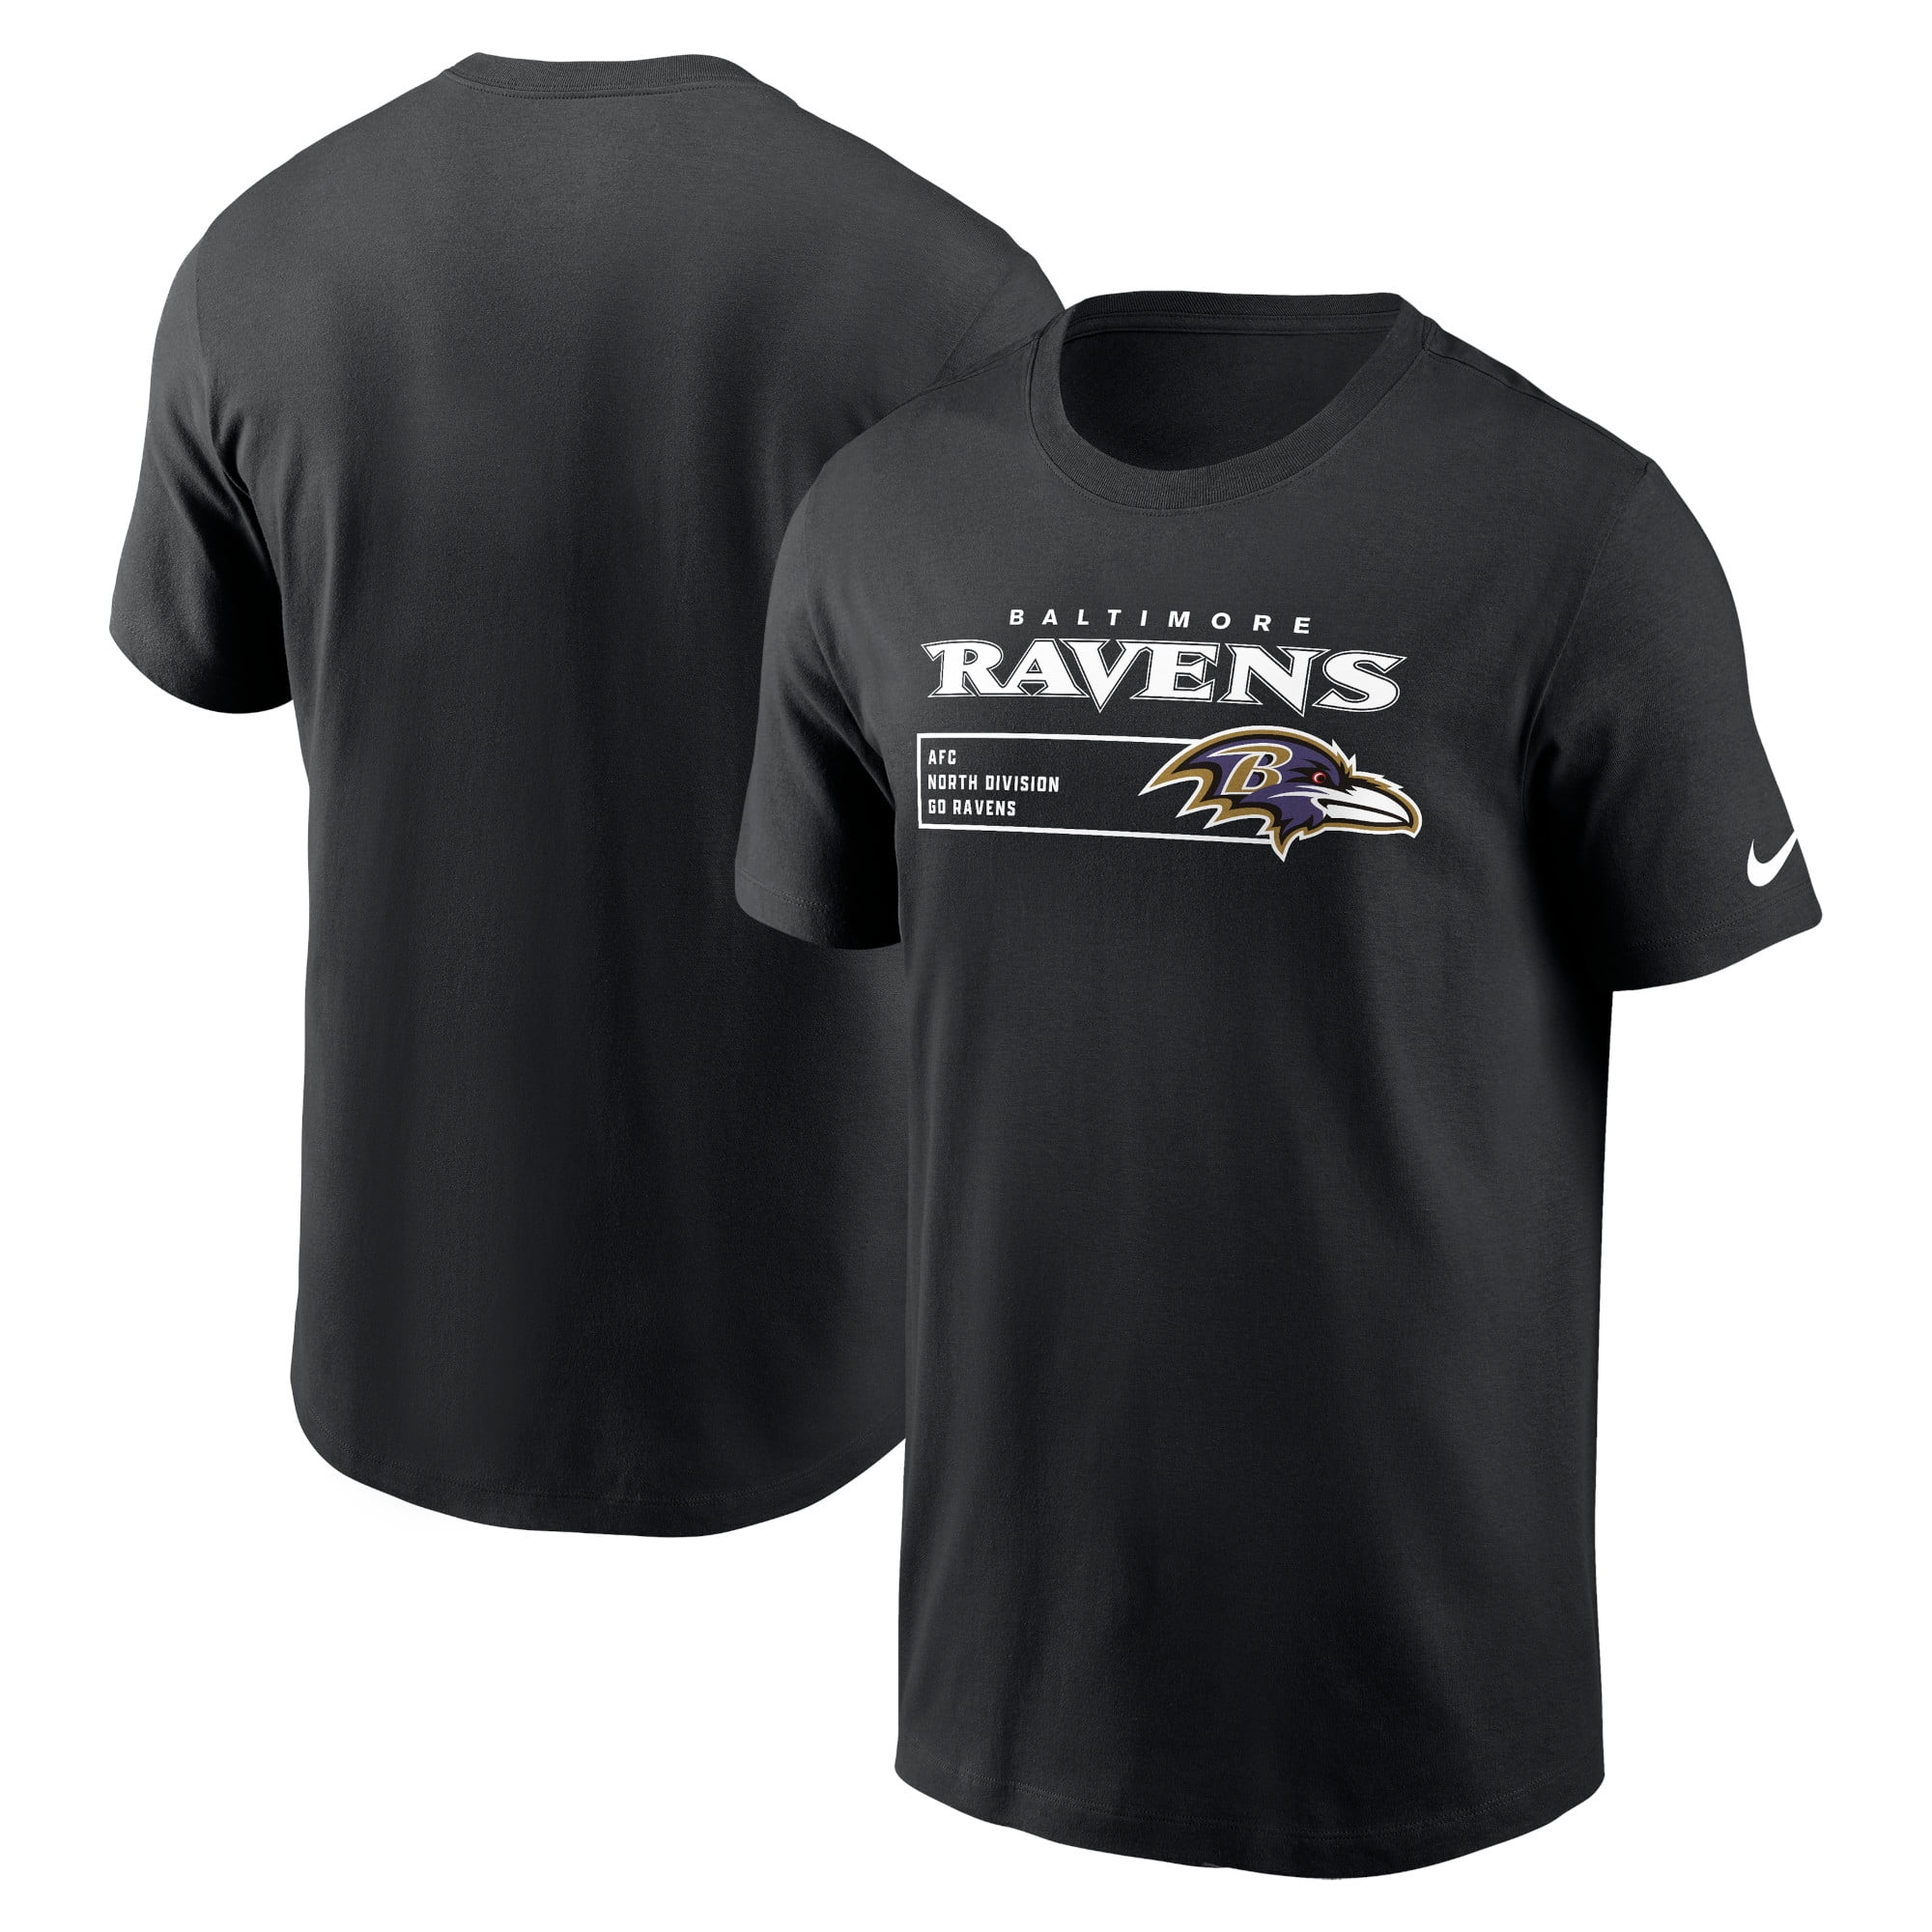 Men's Nike Black Baltimore Ravens Division Essential T-Shirt - Walmart.com